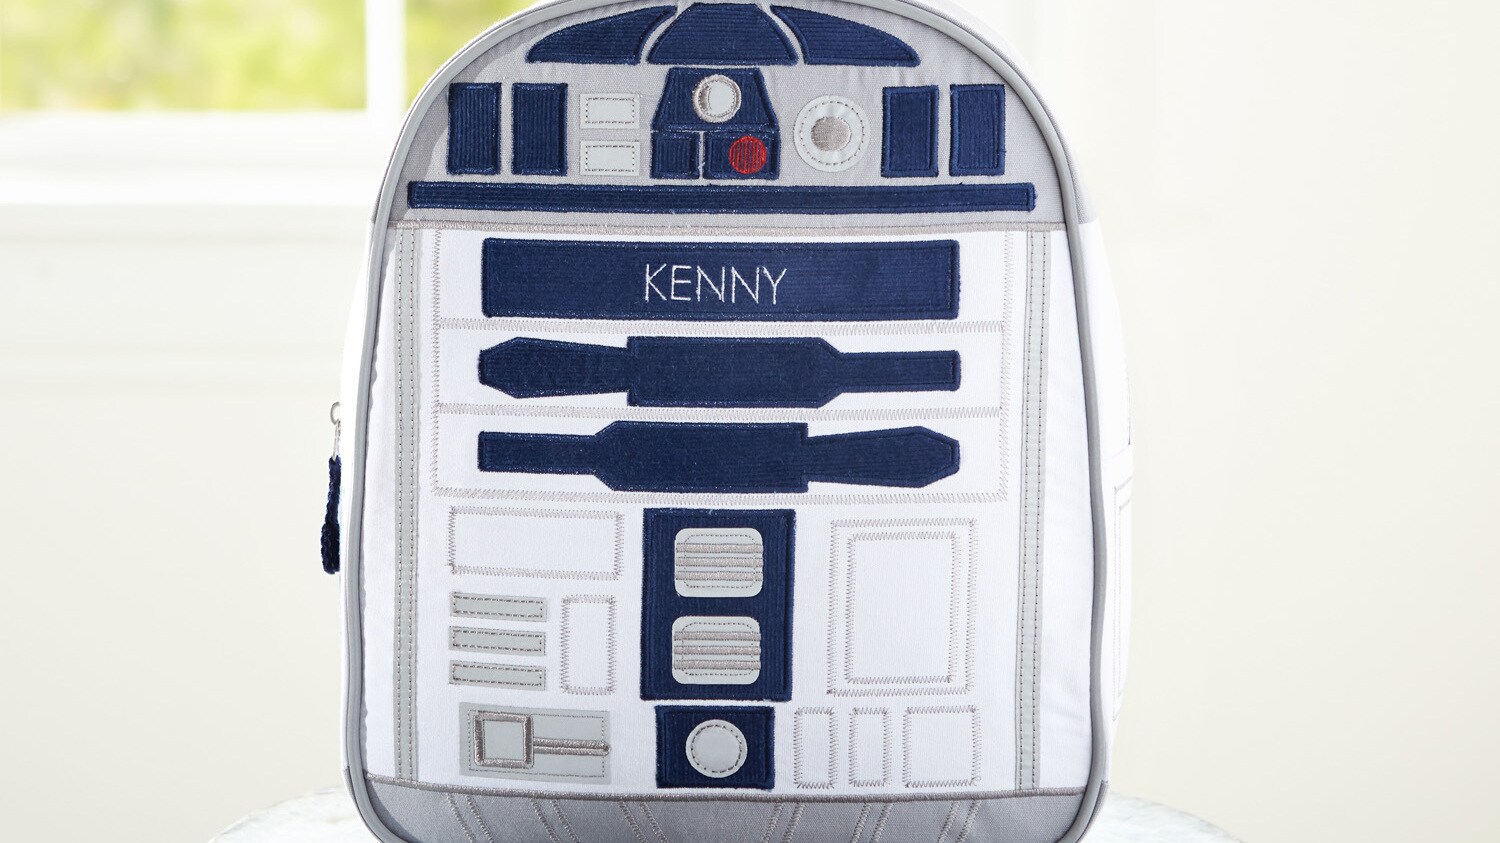 Pottery Barn Star Wars talking backpack - R2-D2